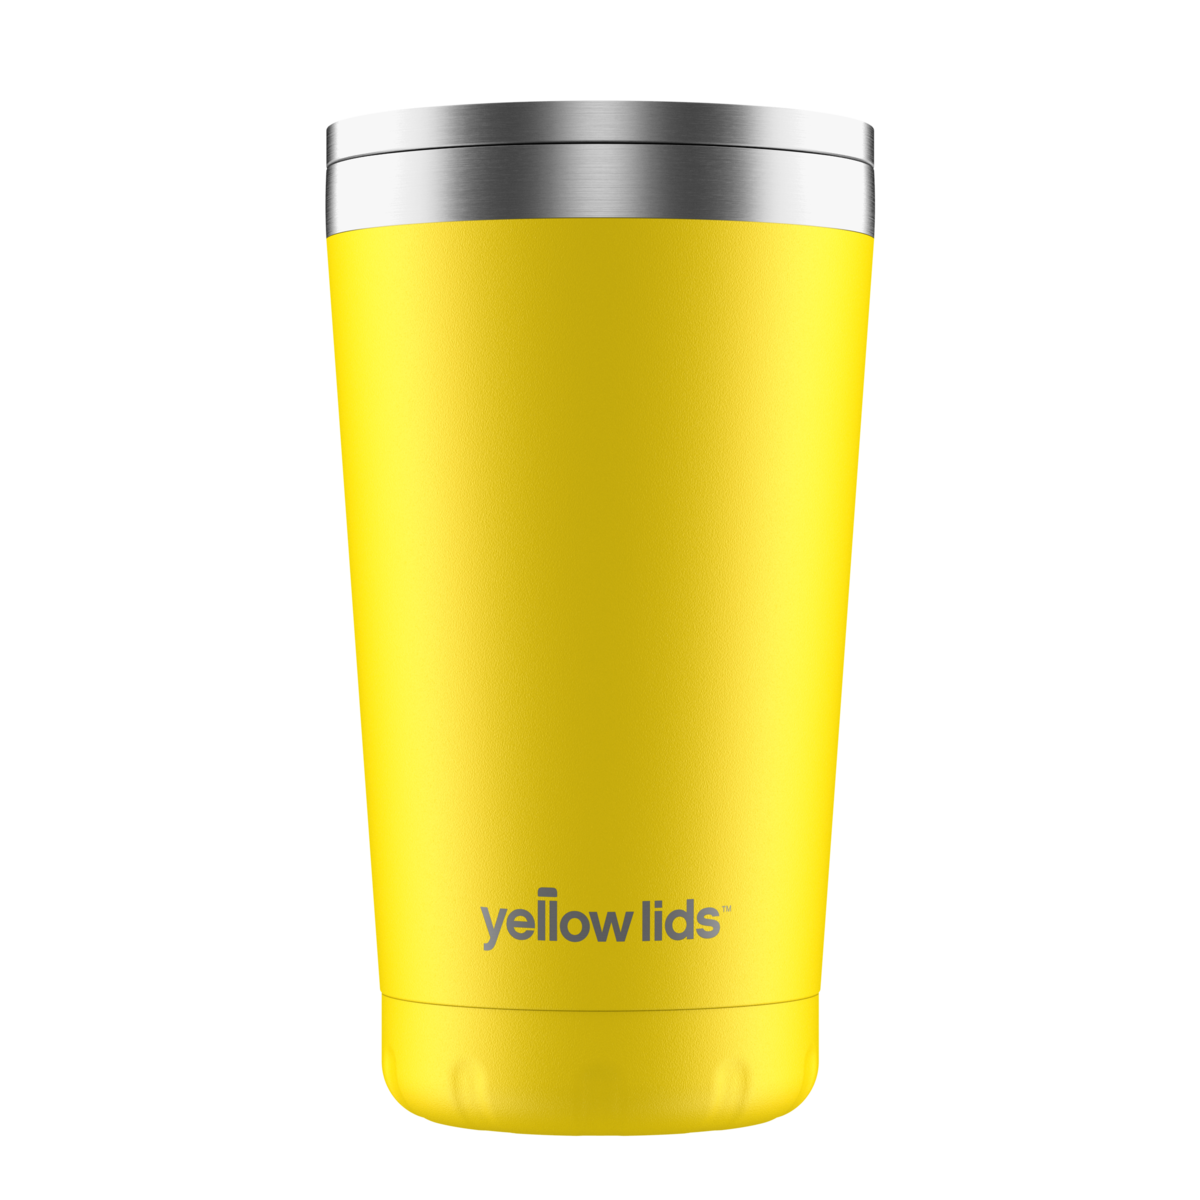 Tang Yellow Reusable Cup 450ml